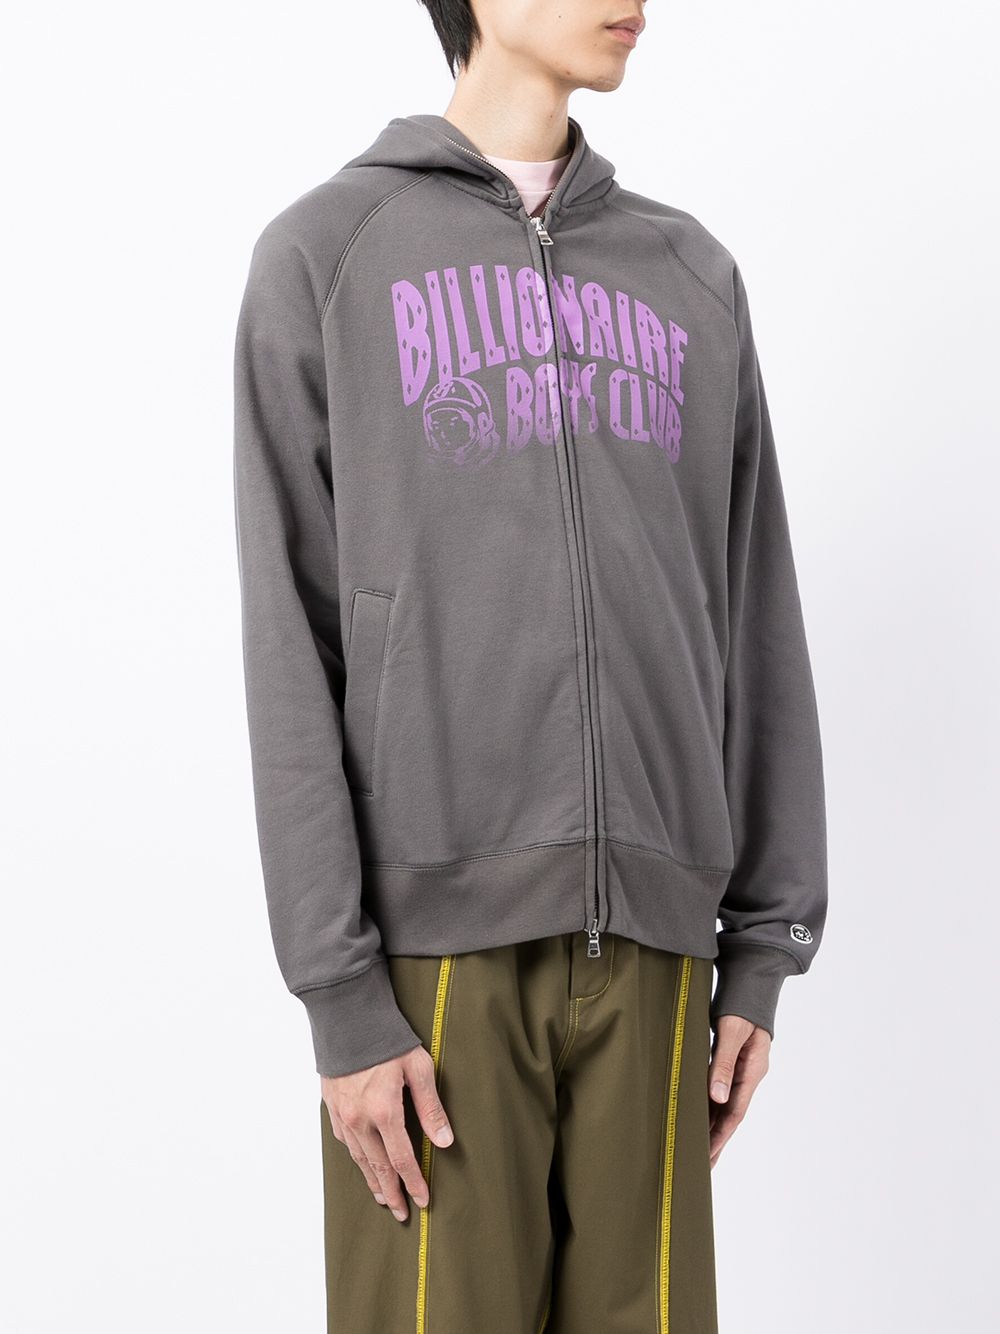 фото Billionaire boys club худи на молнии с логотипом